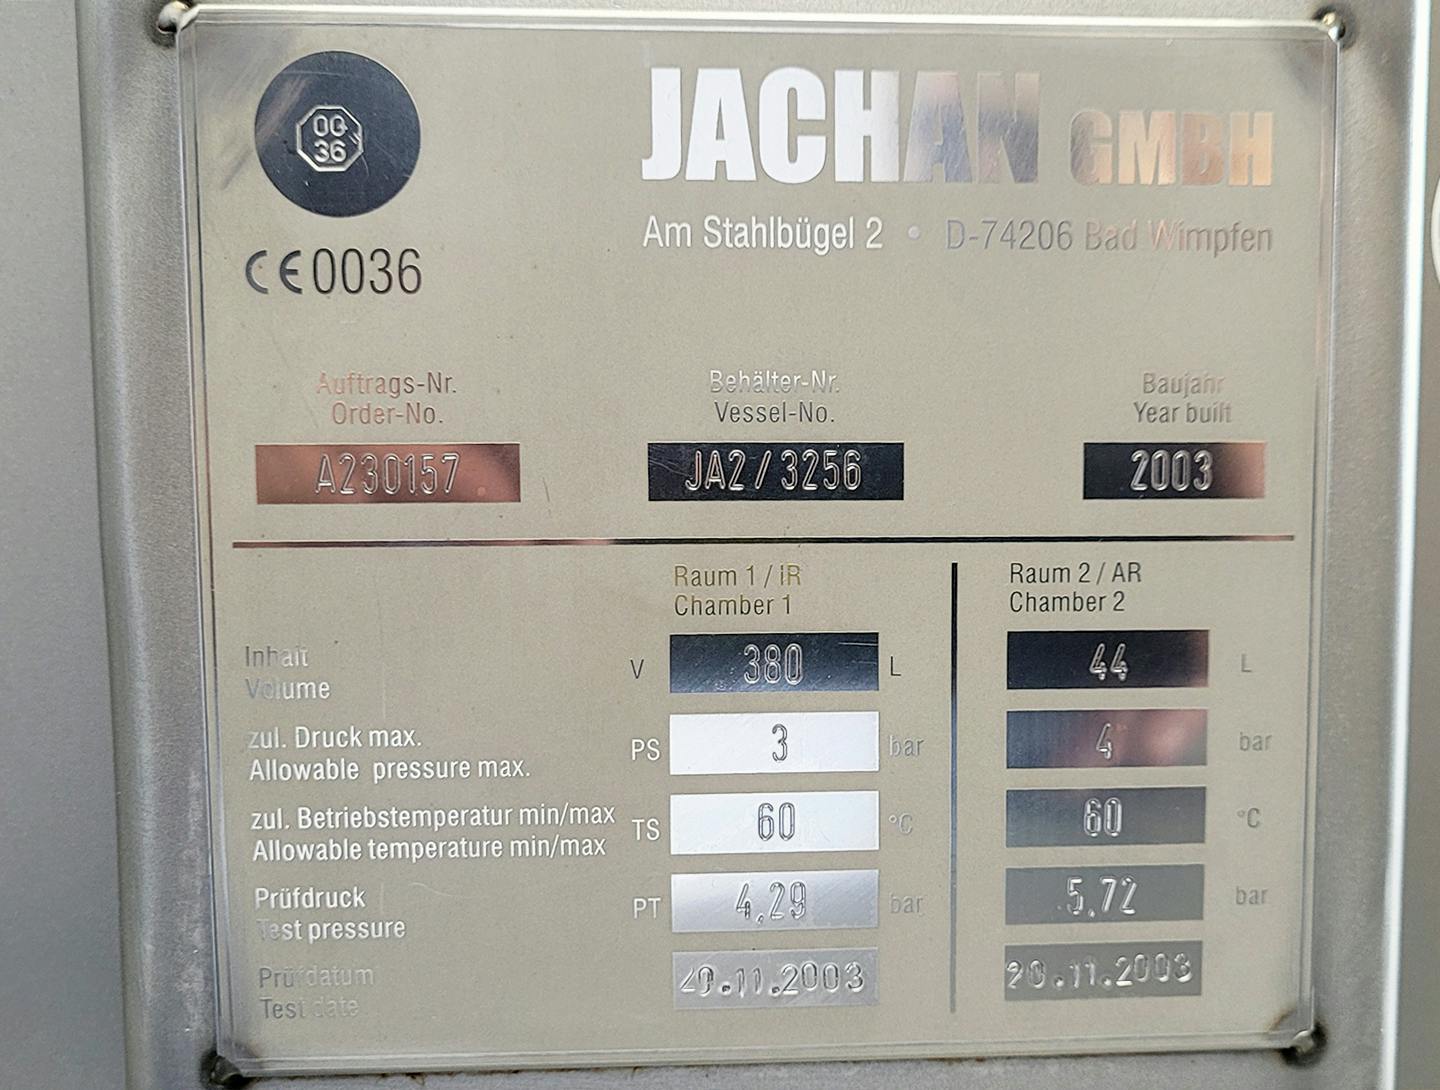 Jachan EK 3 380 Ltr. - Stainless Steel Reactor - image 17